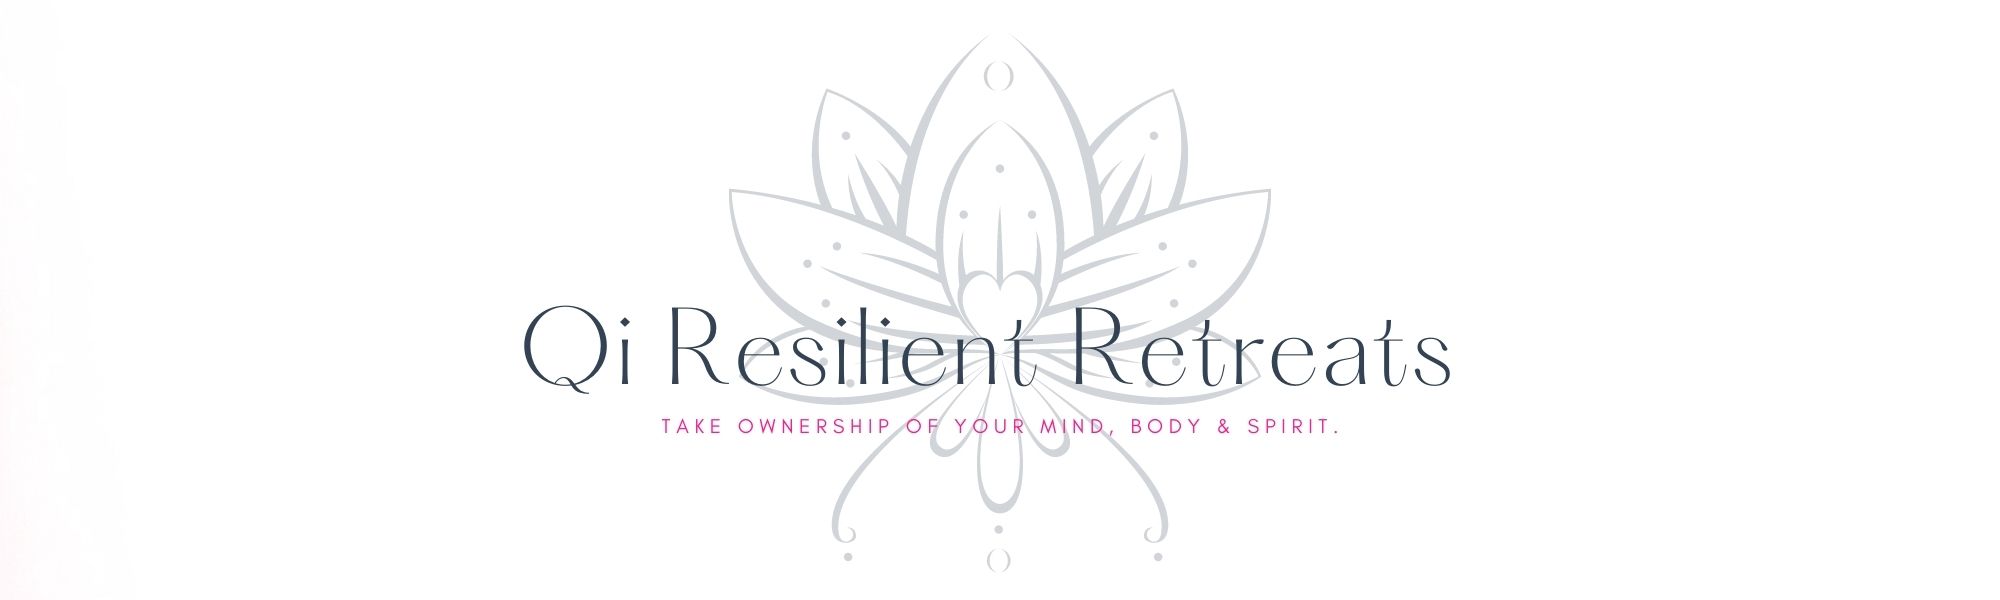 Qi Resilient Retreats